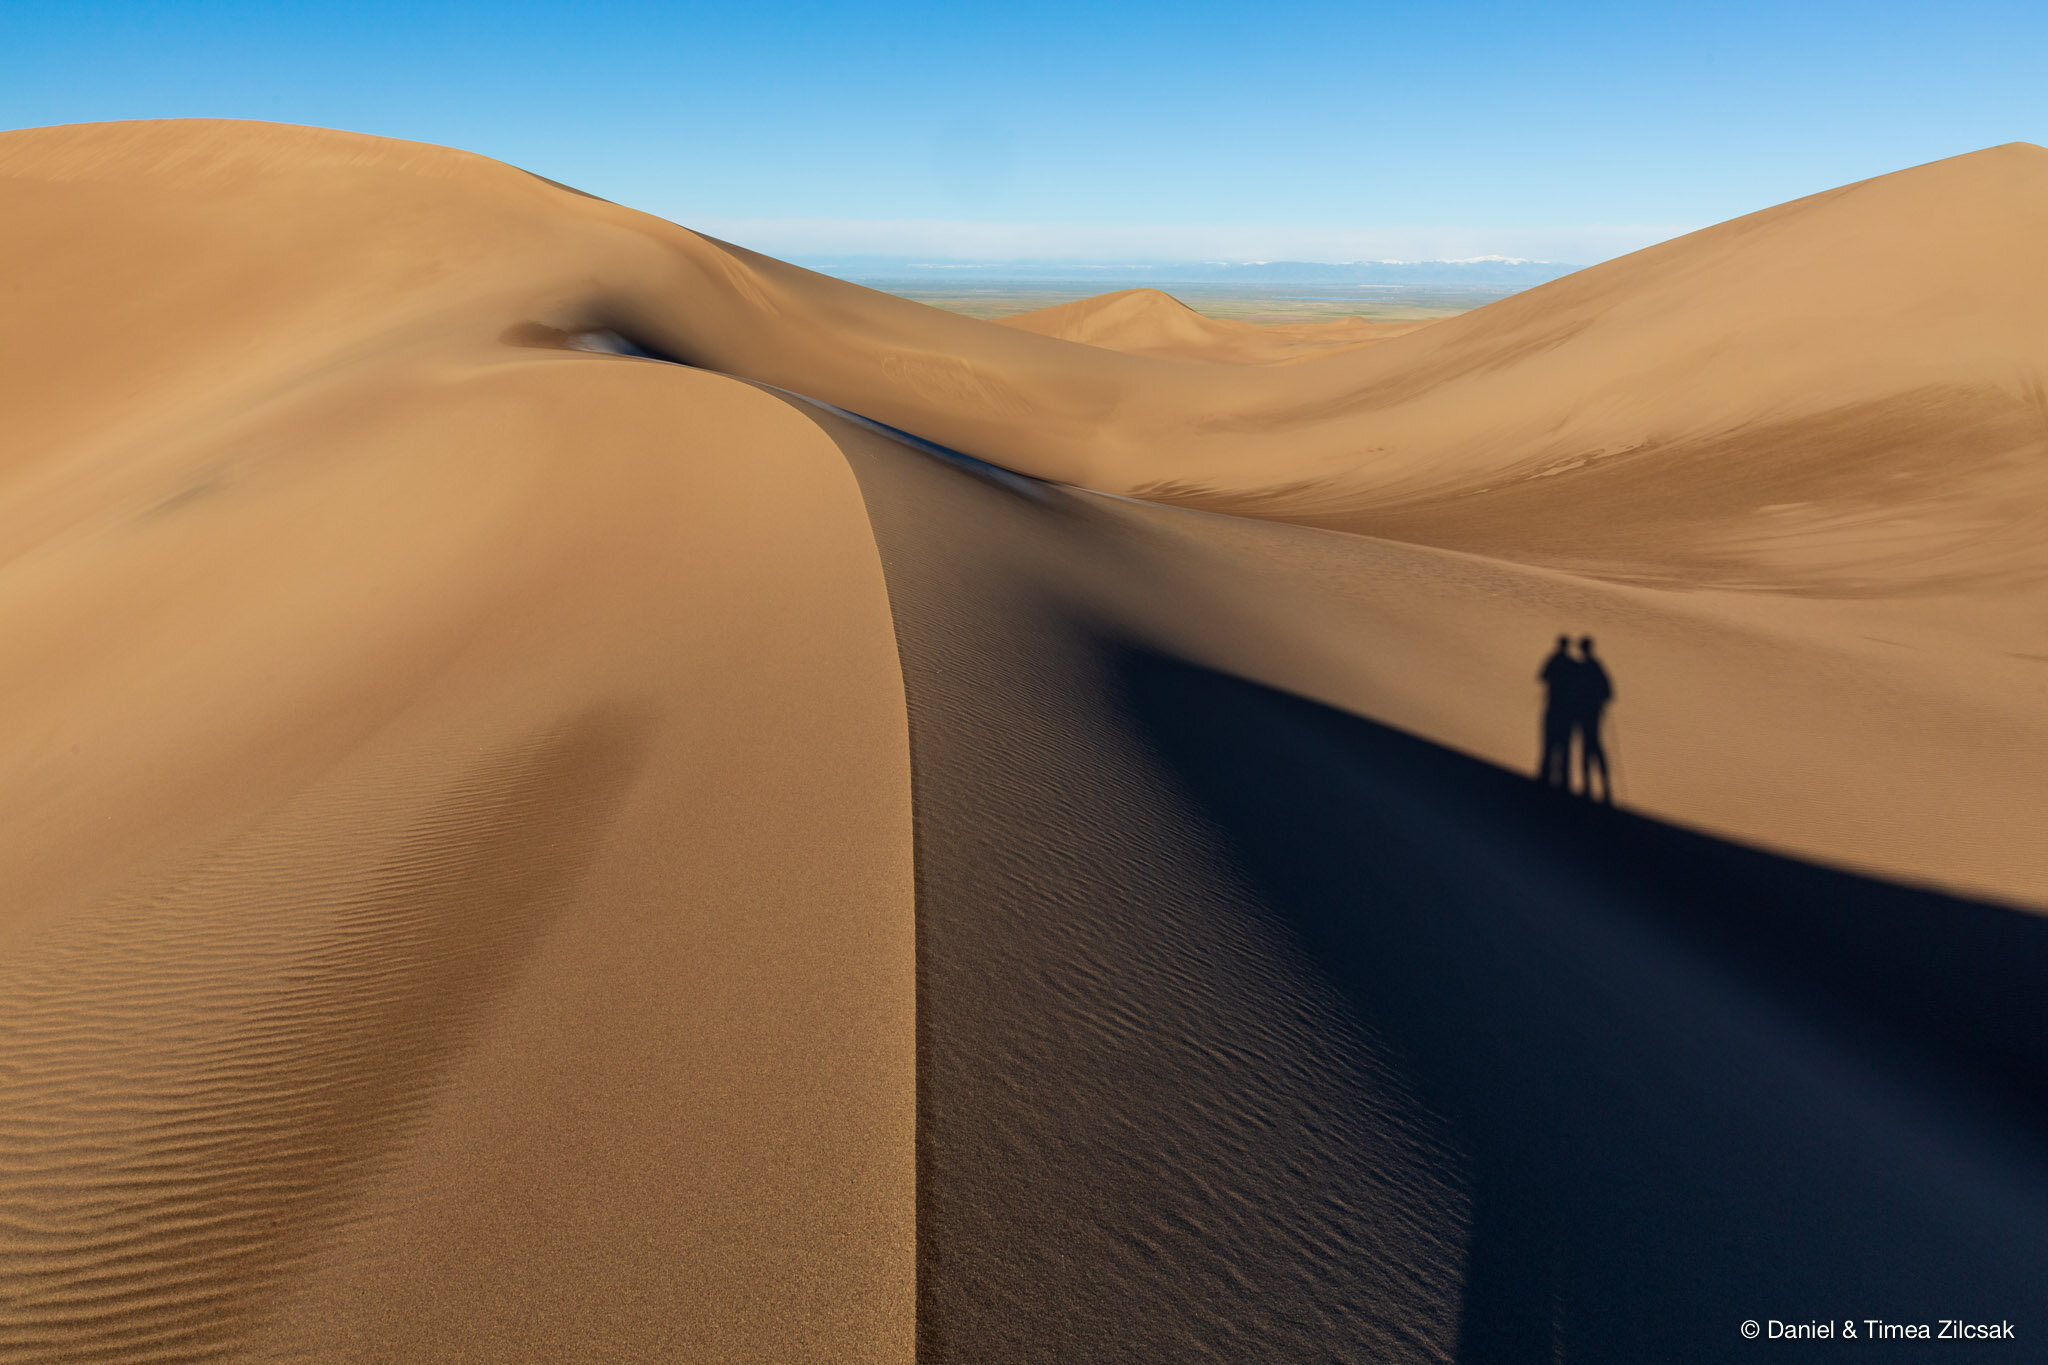 Great-Sand-Dunes-National-Park-9198.jpg